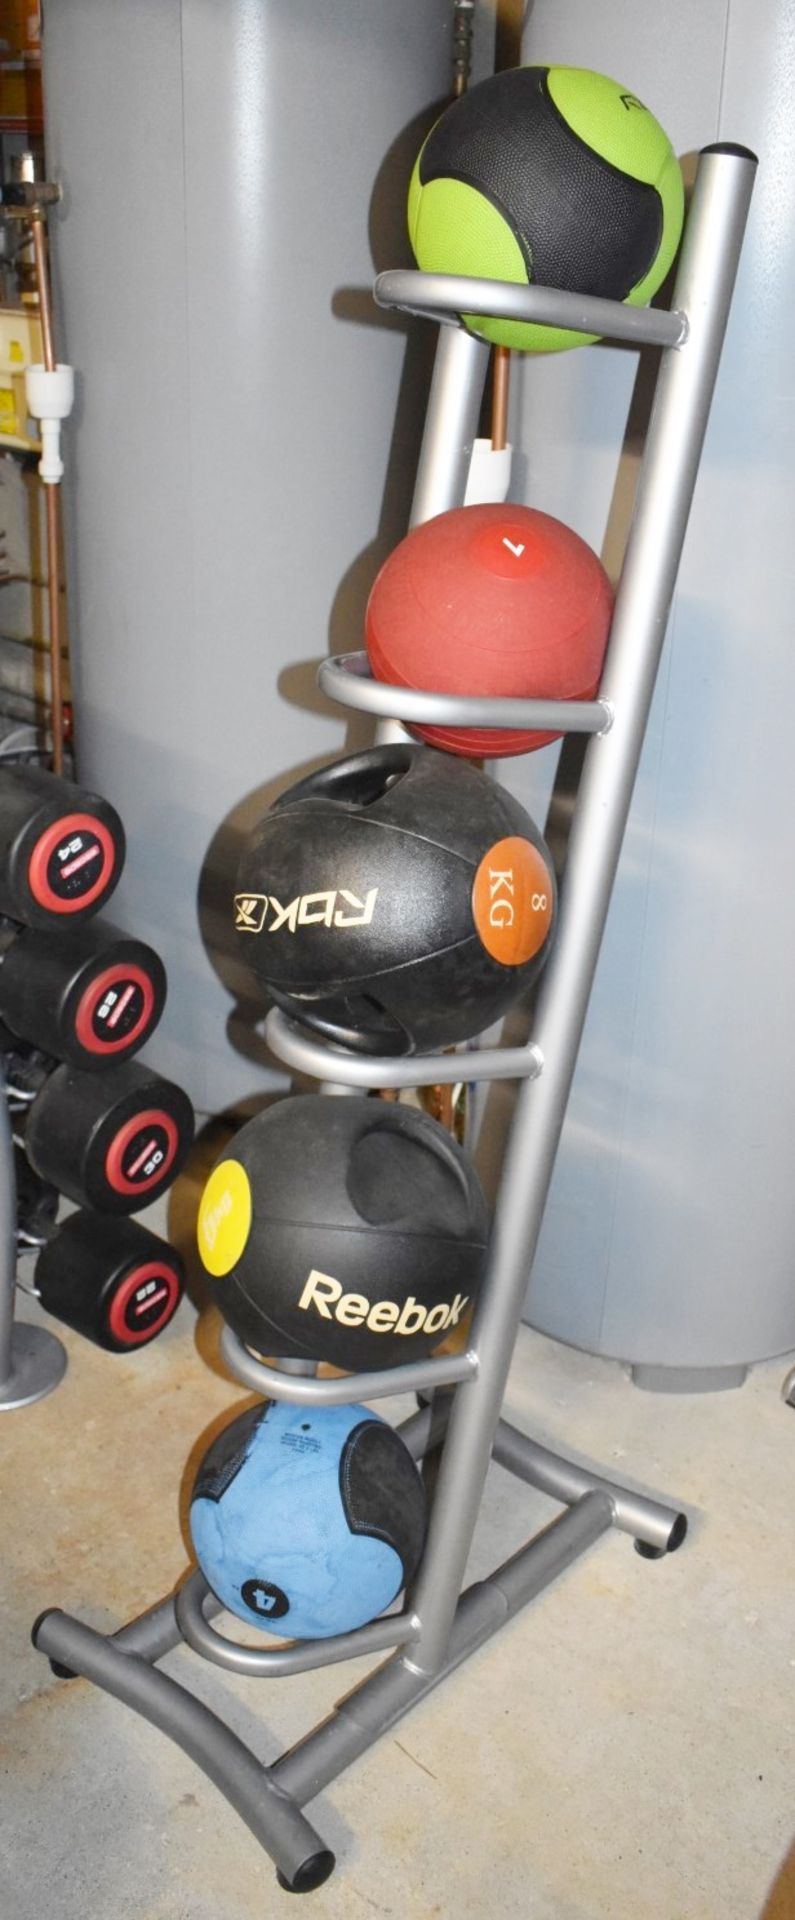 5 x Fitness Medicine Balls - Features Jordon Slam Ball and Reebok - Includes Ball Rack - CL546 -